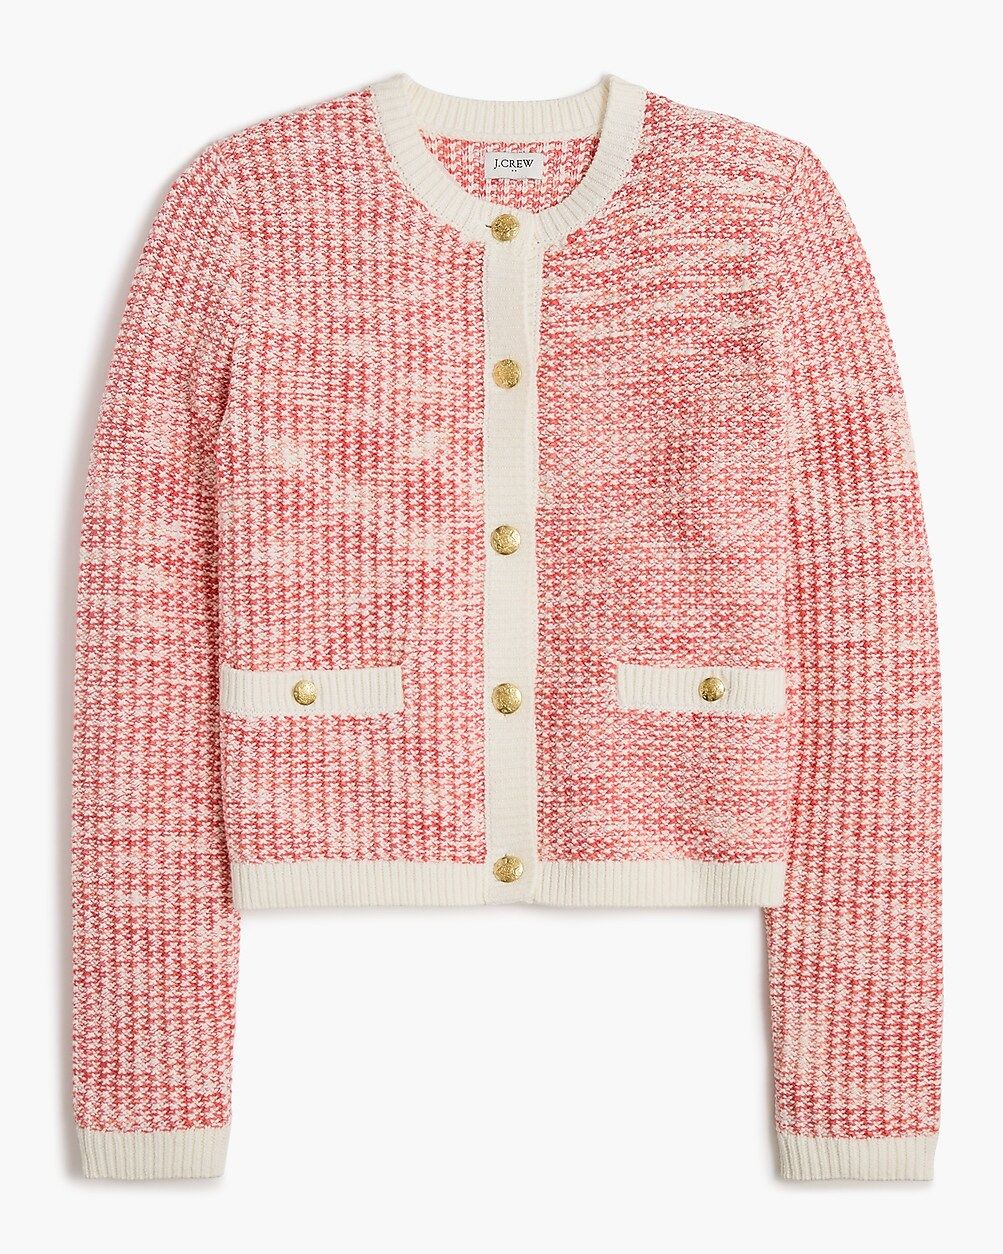 Popcorn-stitch lady jacket cardigan sweater | J.Crew Factory